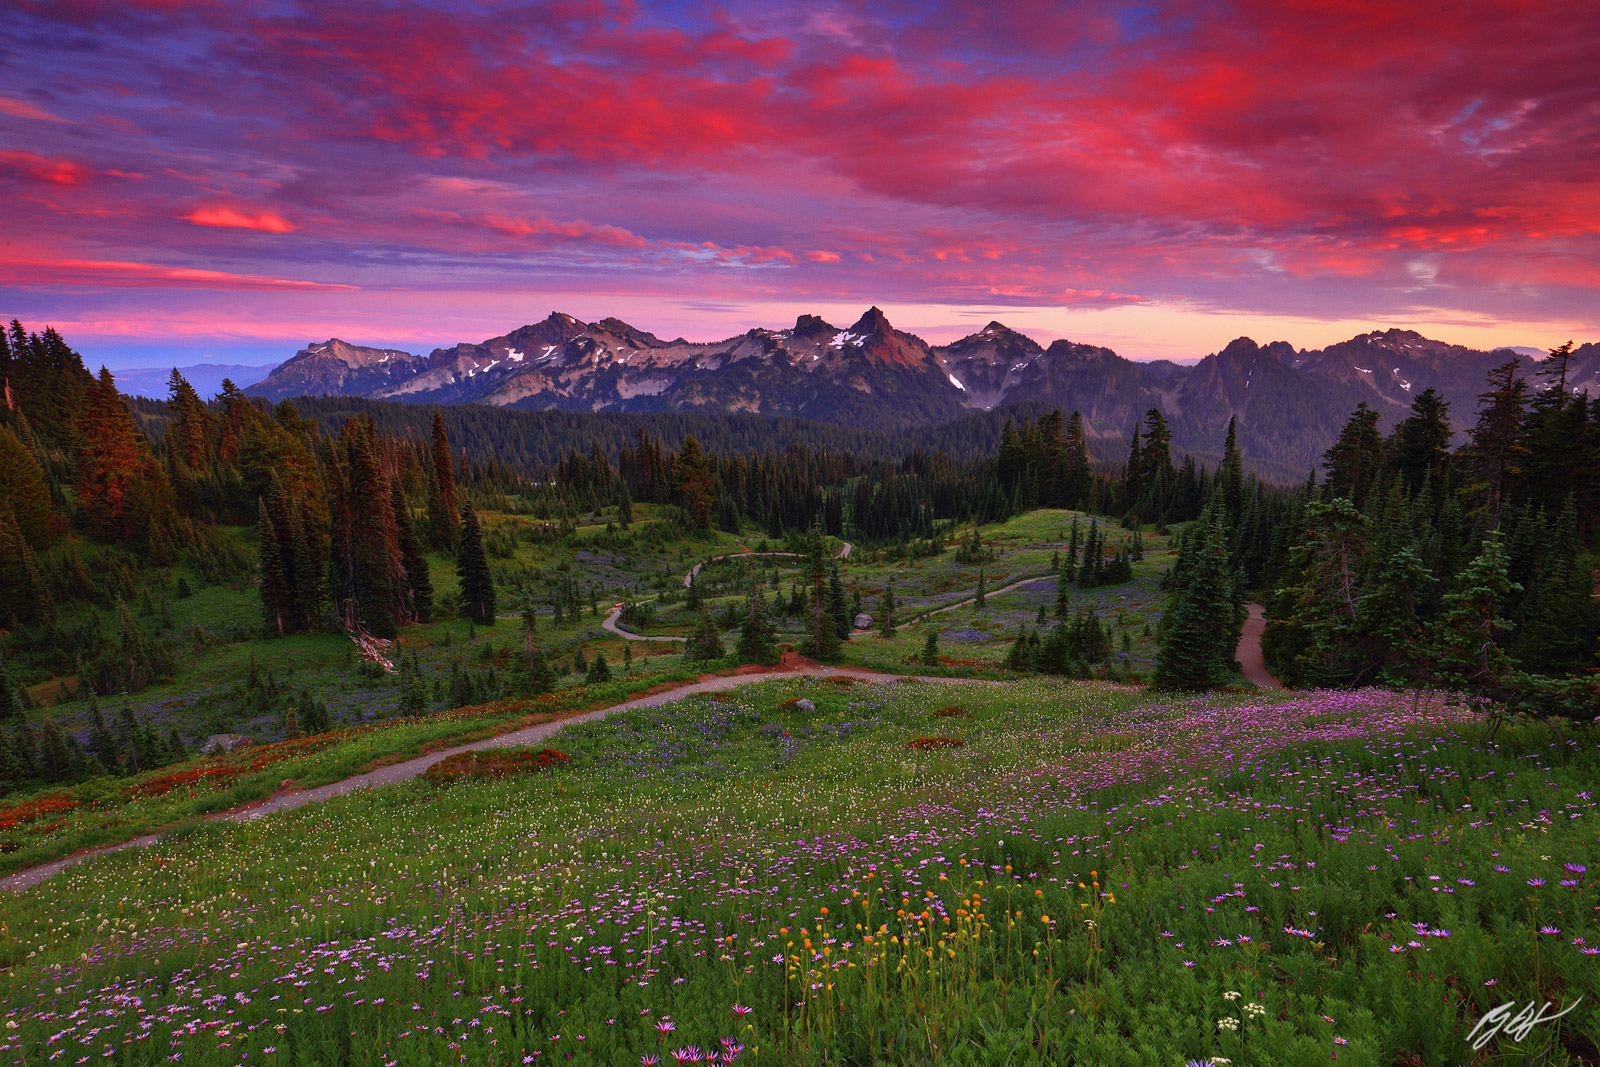 Sunset Wildflowers and the Tatoosh Range from Paradise Meadows in Mt Rainier National Park, Washington